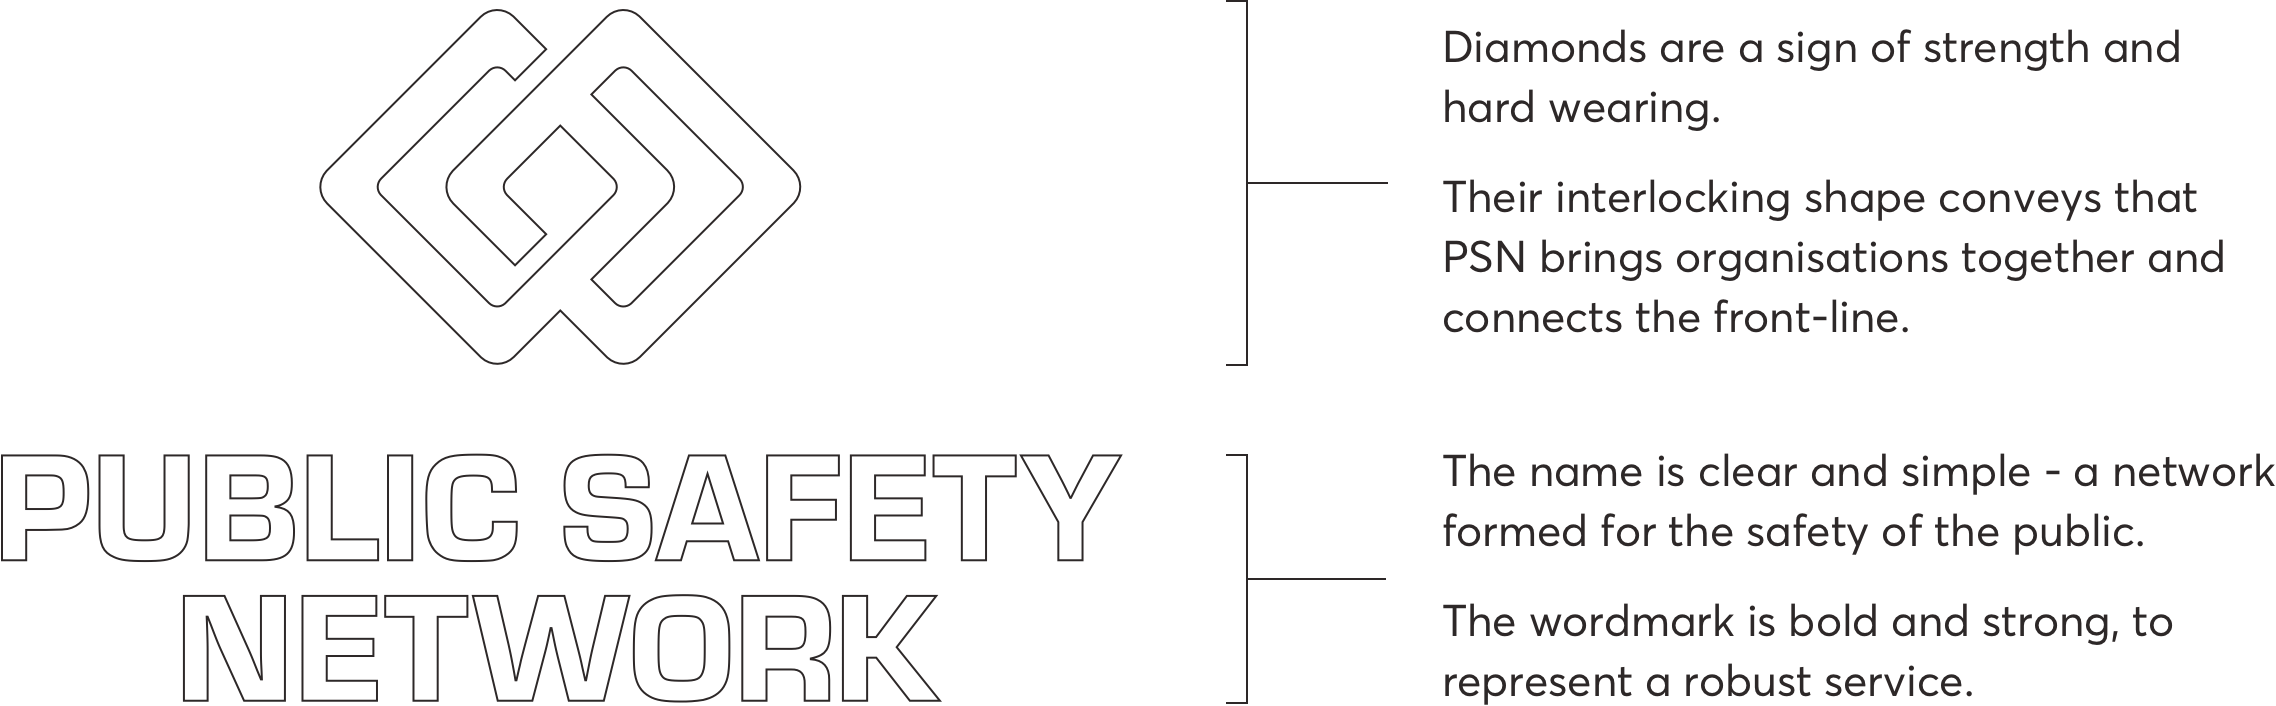 PSN logo details